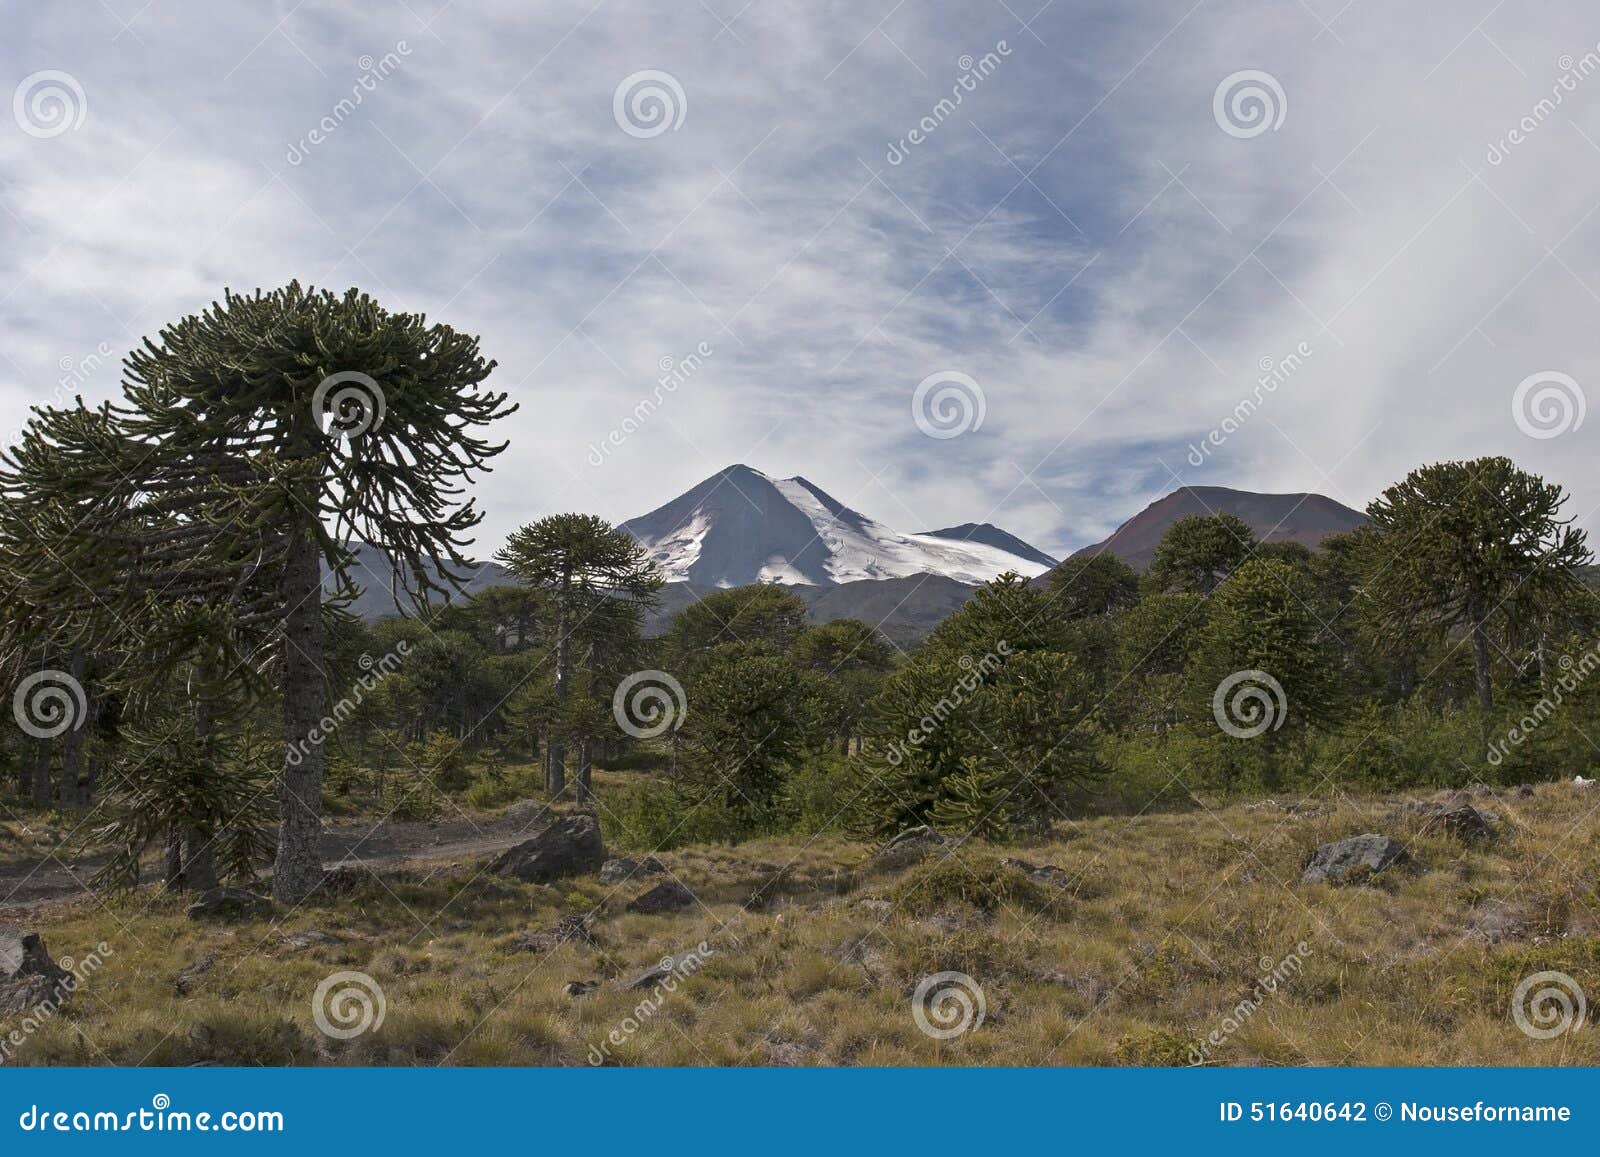 volcan llaima in conguillo nacional park, chile